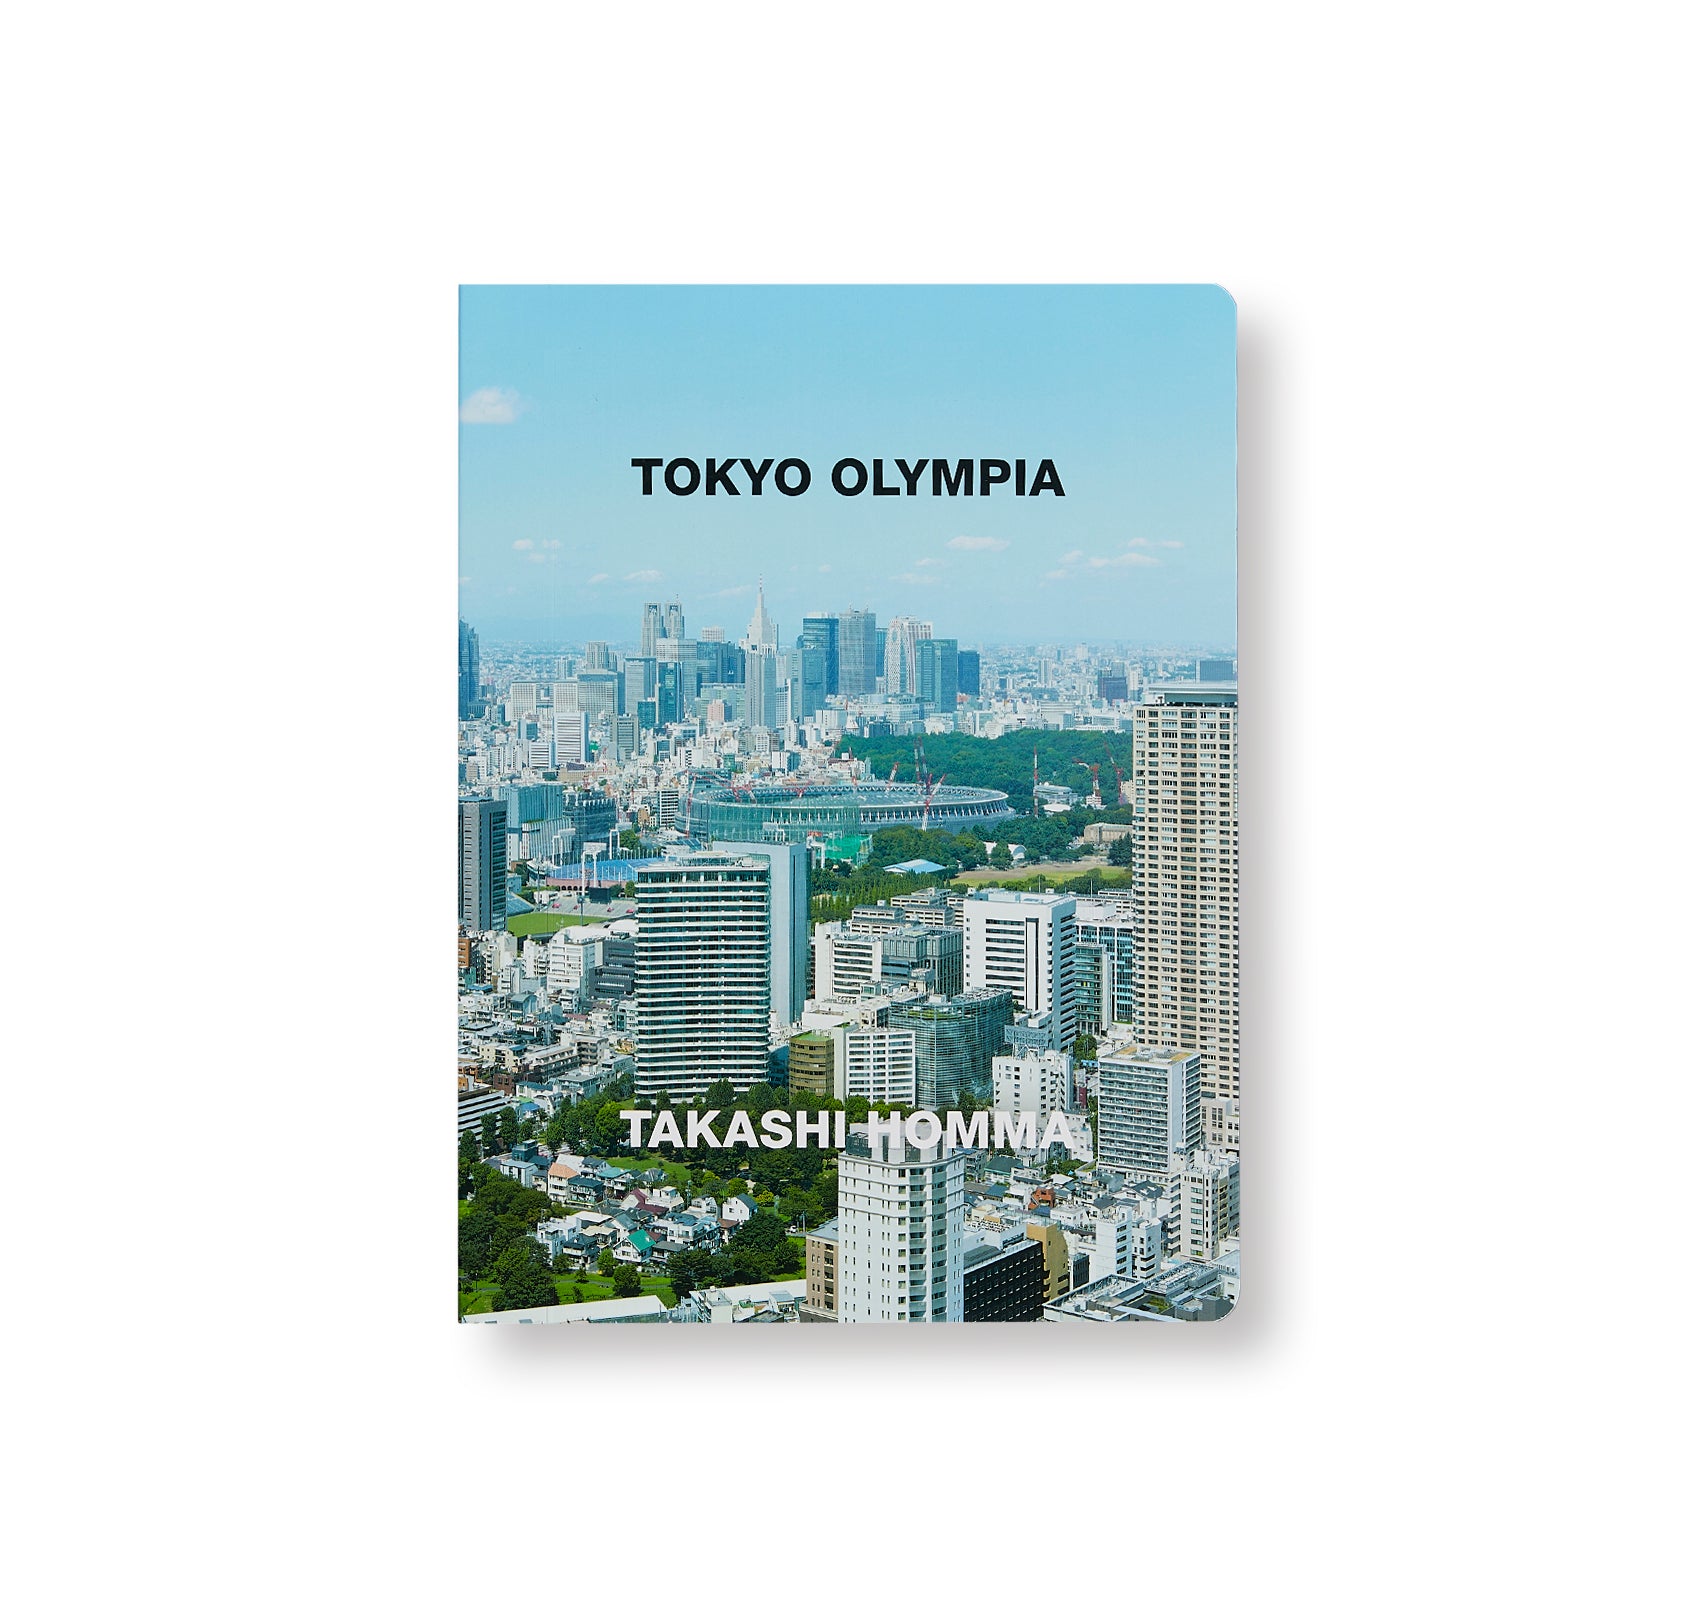 TOKYO OLYMPIA by Takashi Homma – twelvebooks